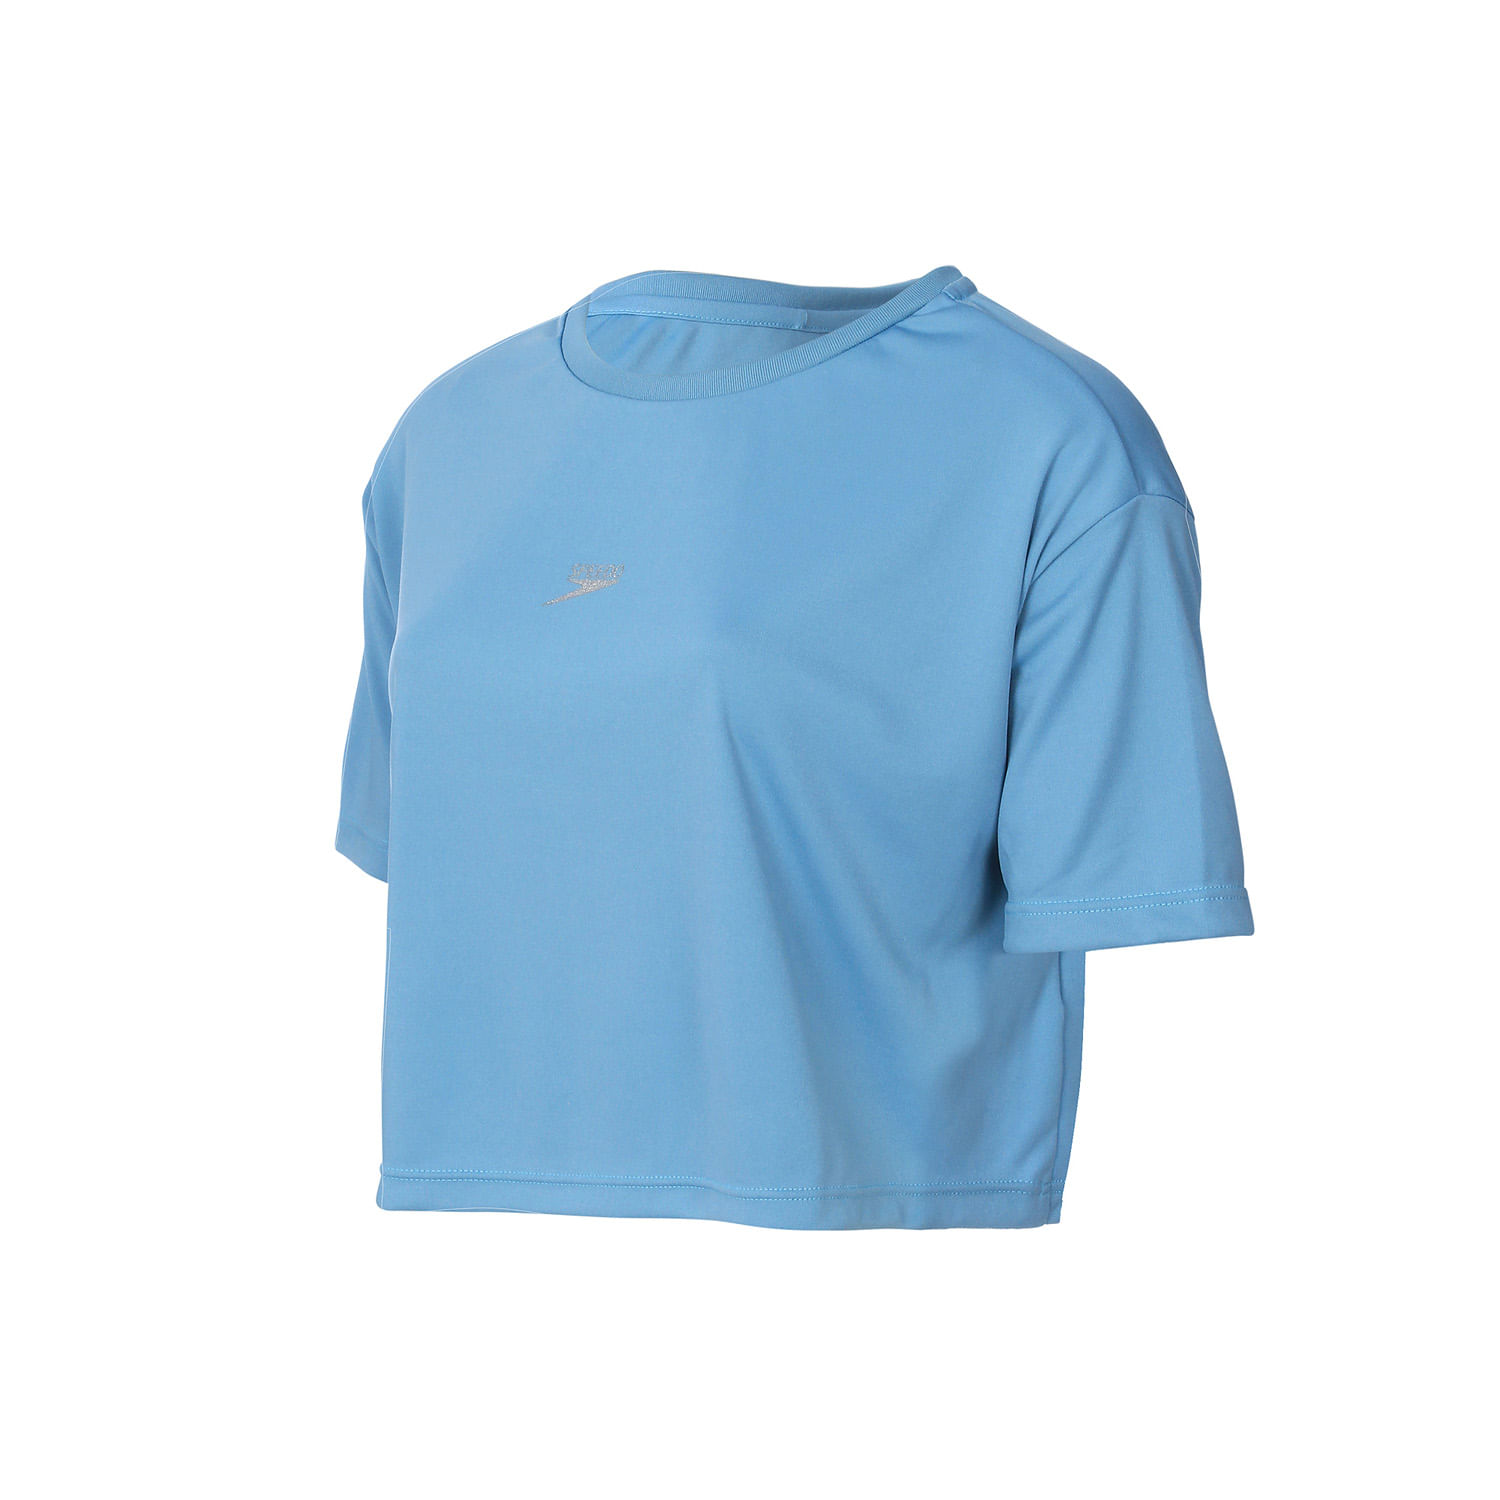 Camiseta Cropped Equilíbrio Feminina - Azul Claro